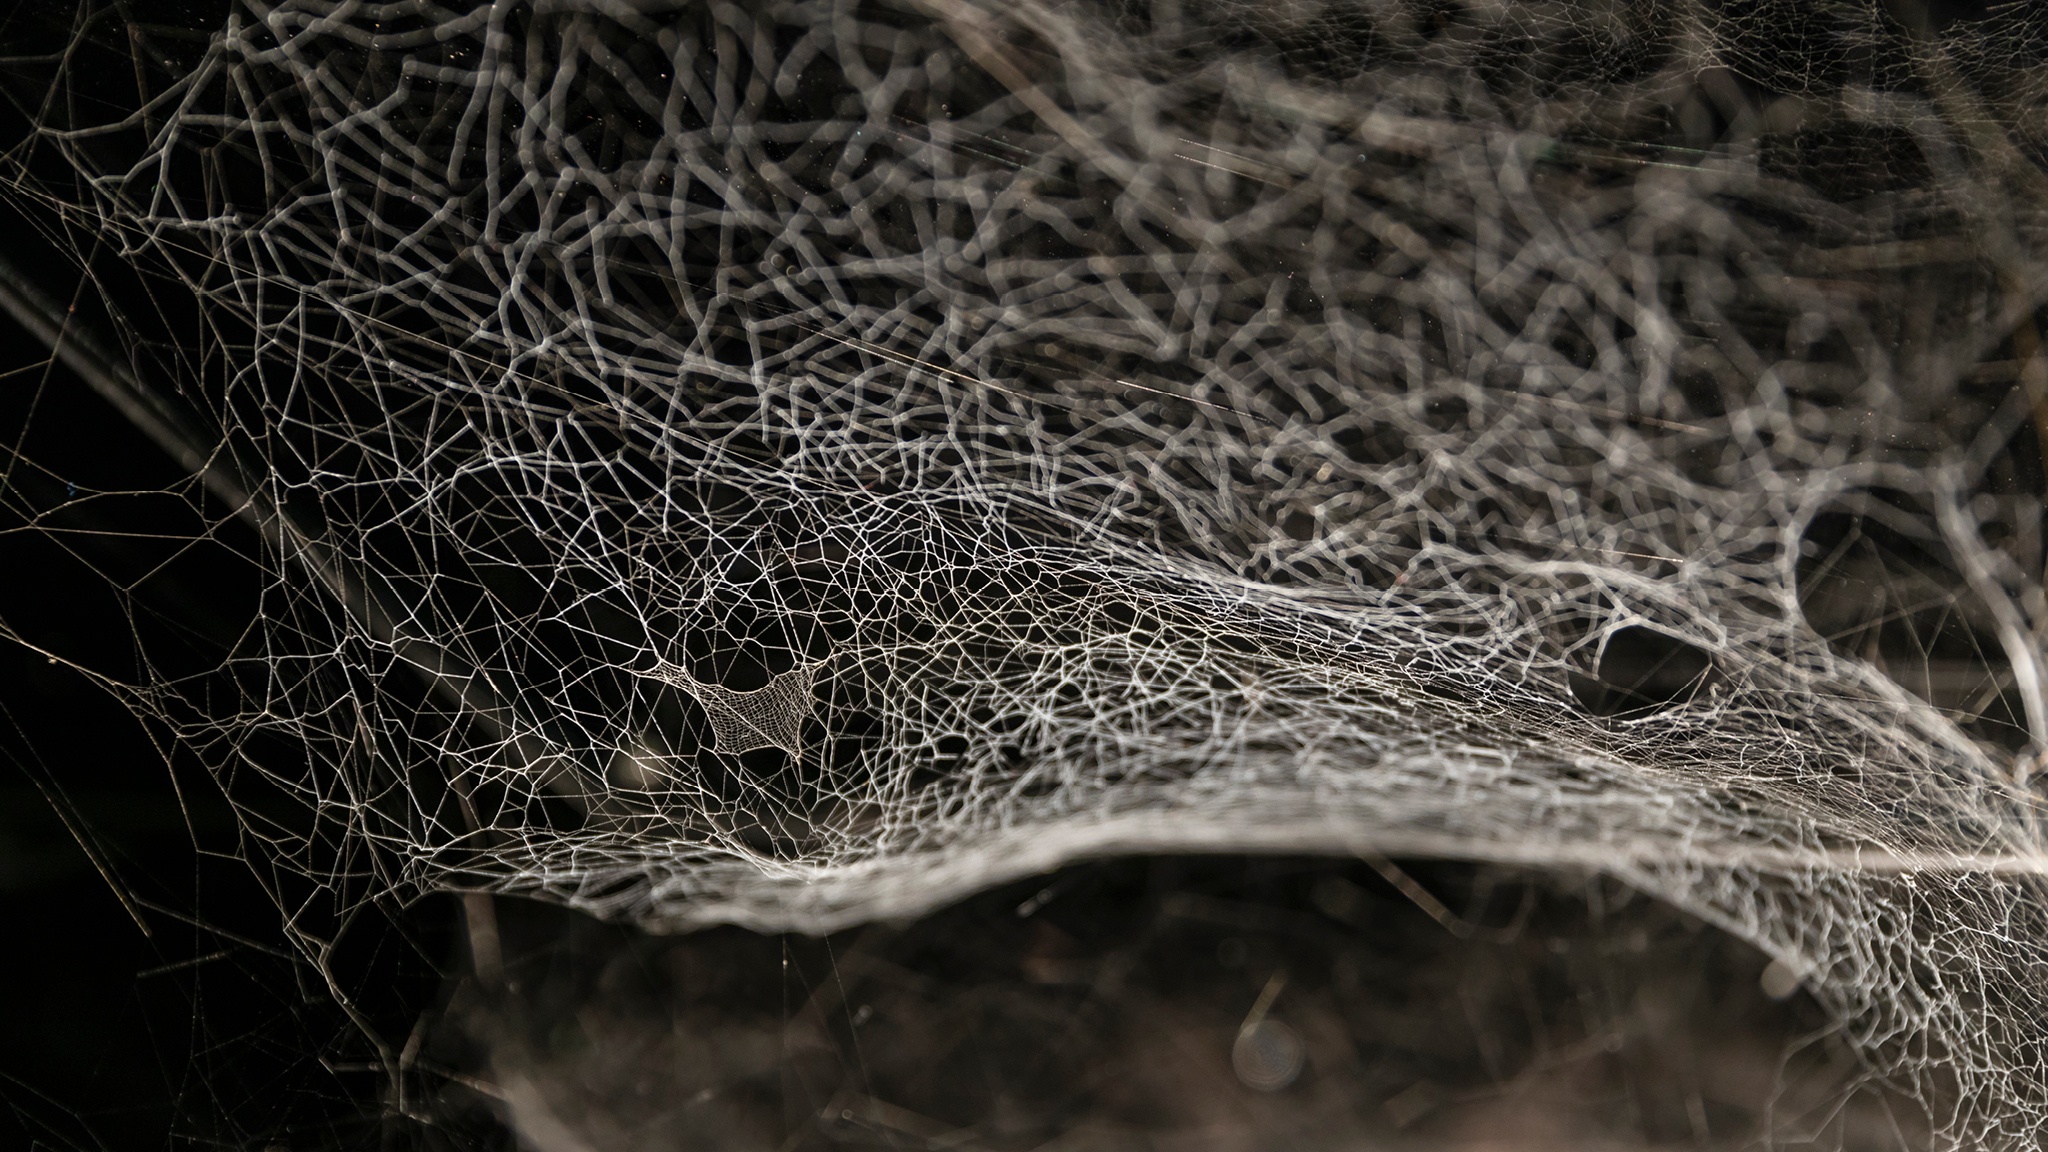 A dramatically lit spider's web